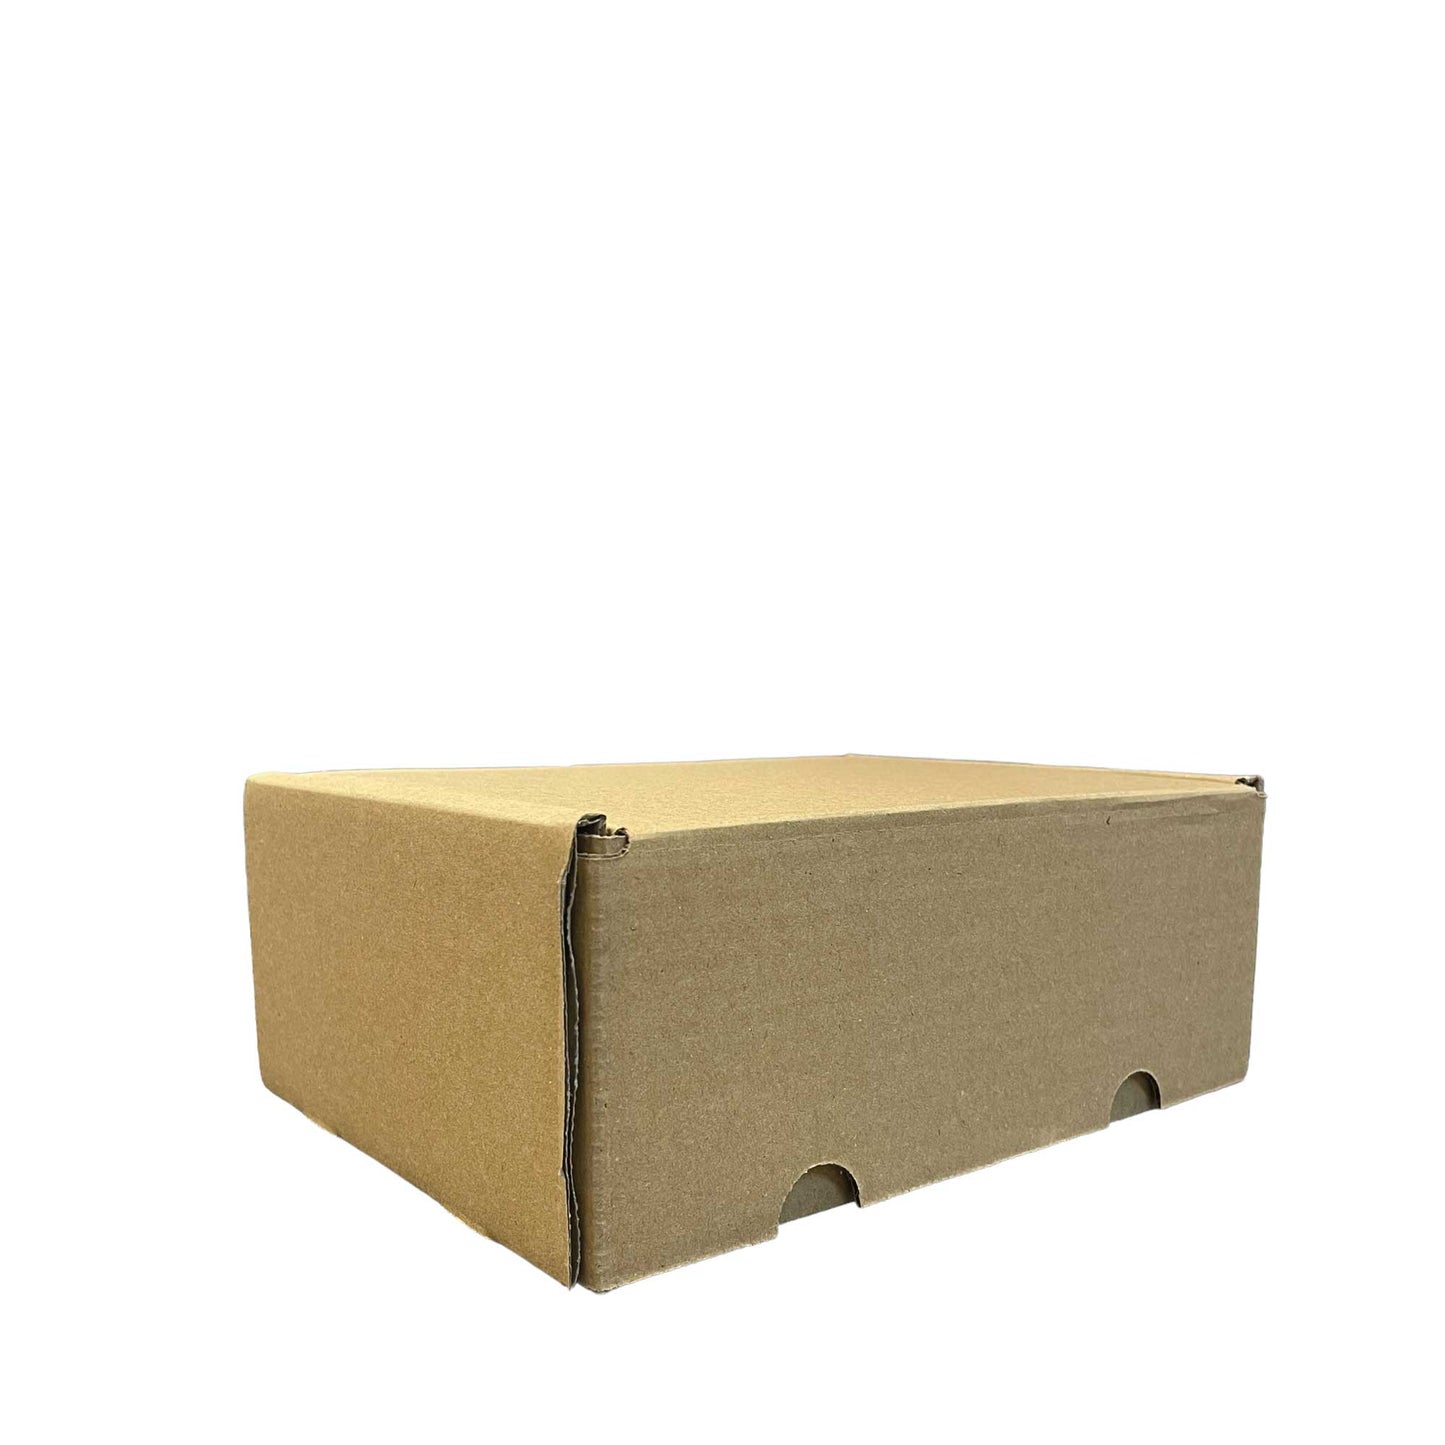 25x Die Cut Cardboard Boxes - 220x220x135mm Packaging Shipping Carton